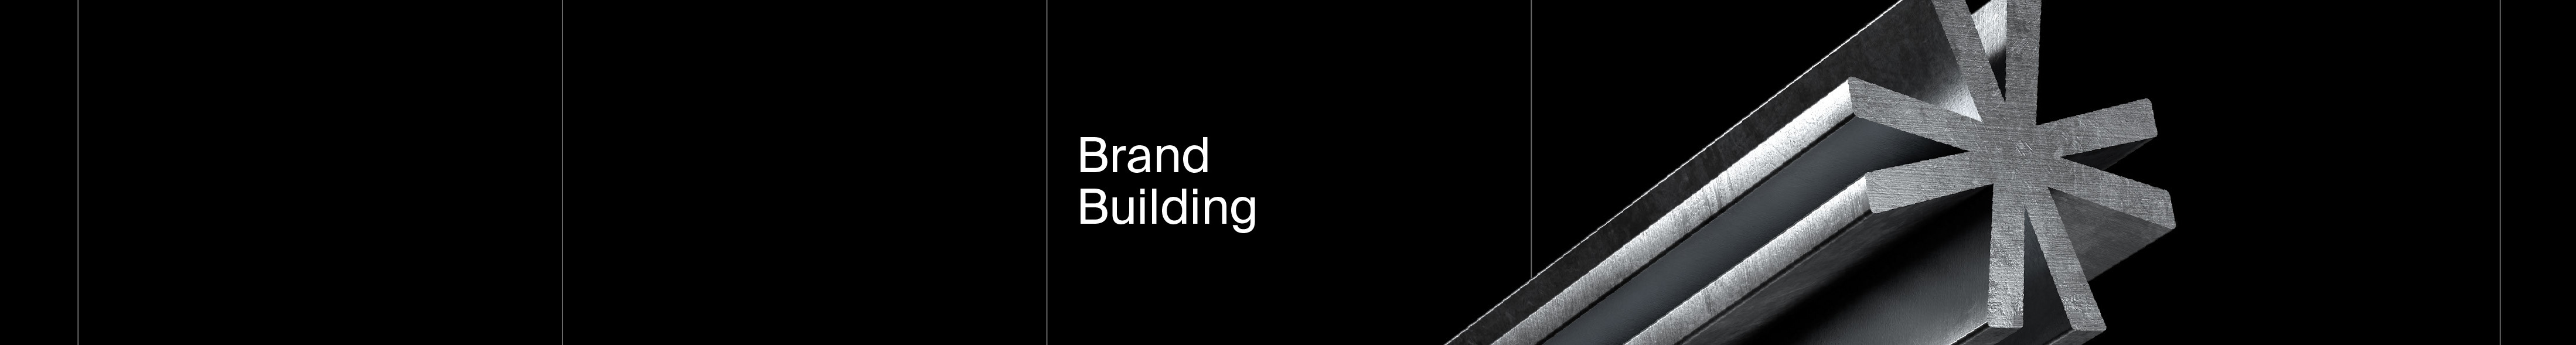 Banner de perfil de VXLAB Brand Building